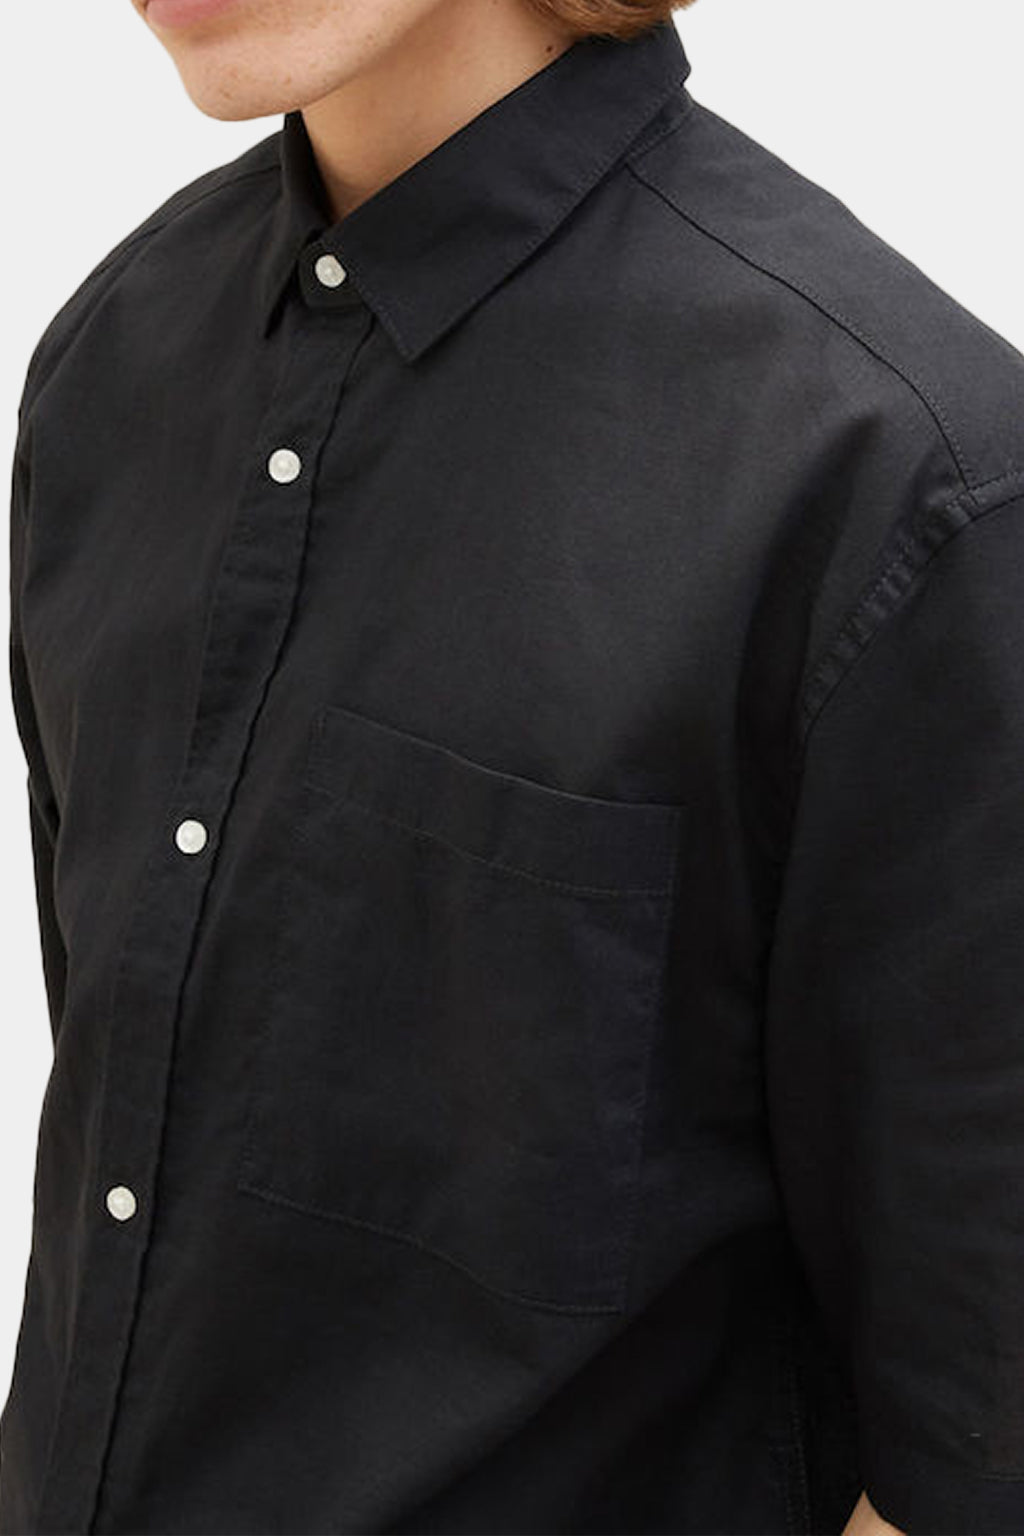 Tom Tailor - Men's Shirt With Short Sleeves Black